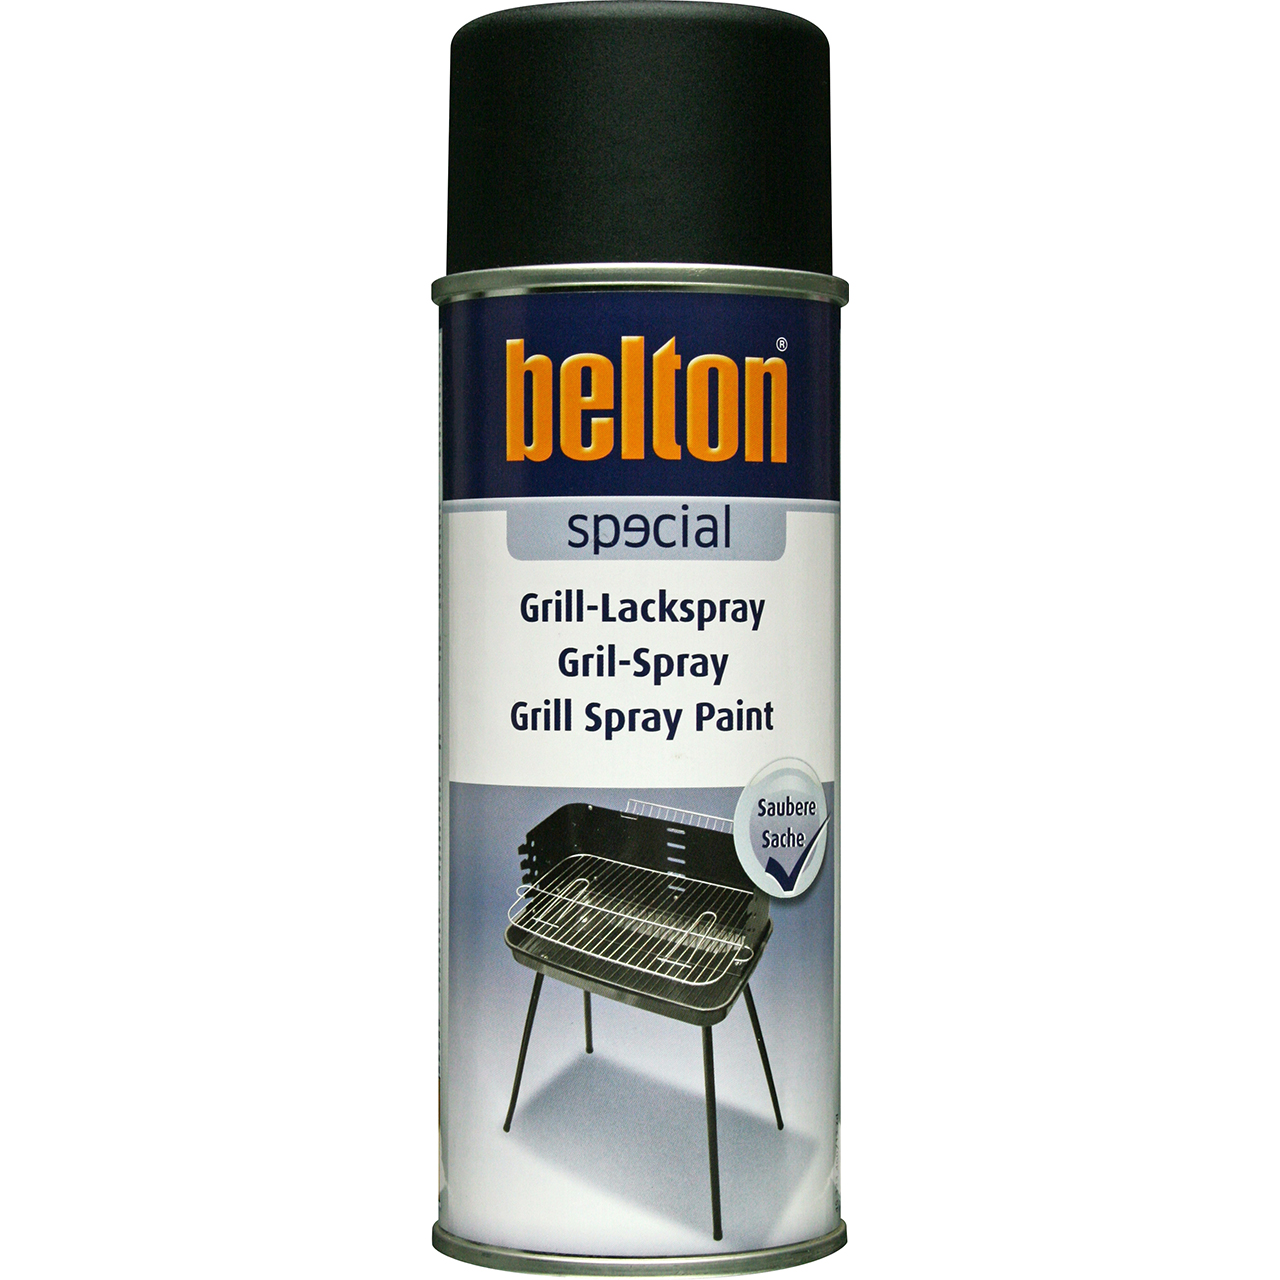 belton Special Grill-Lackspray schwarz matt, 400ml